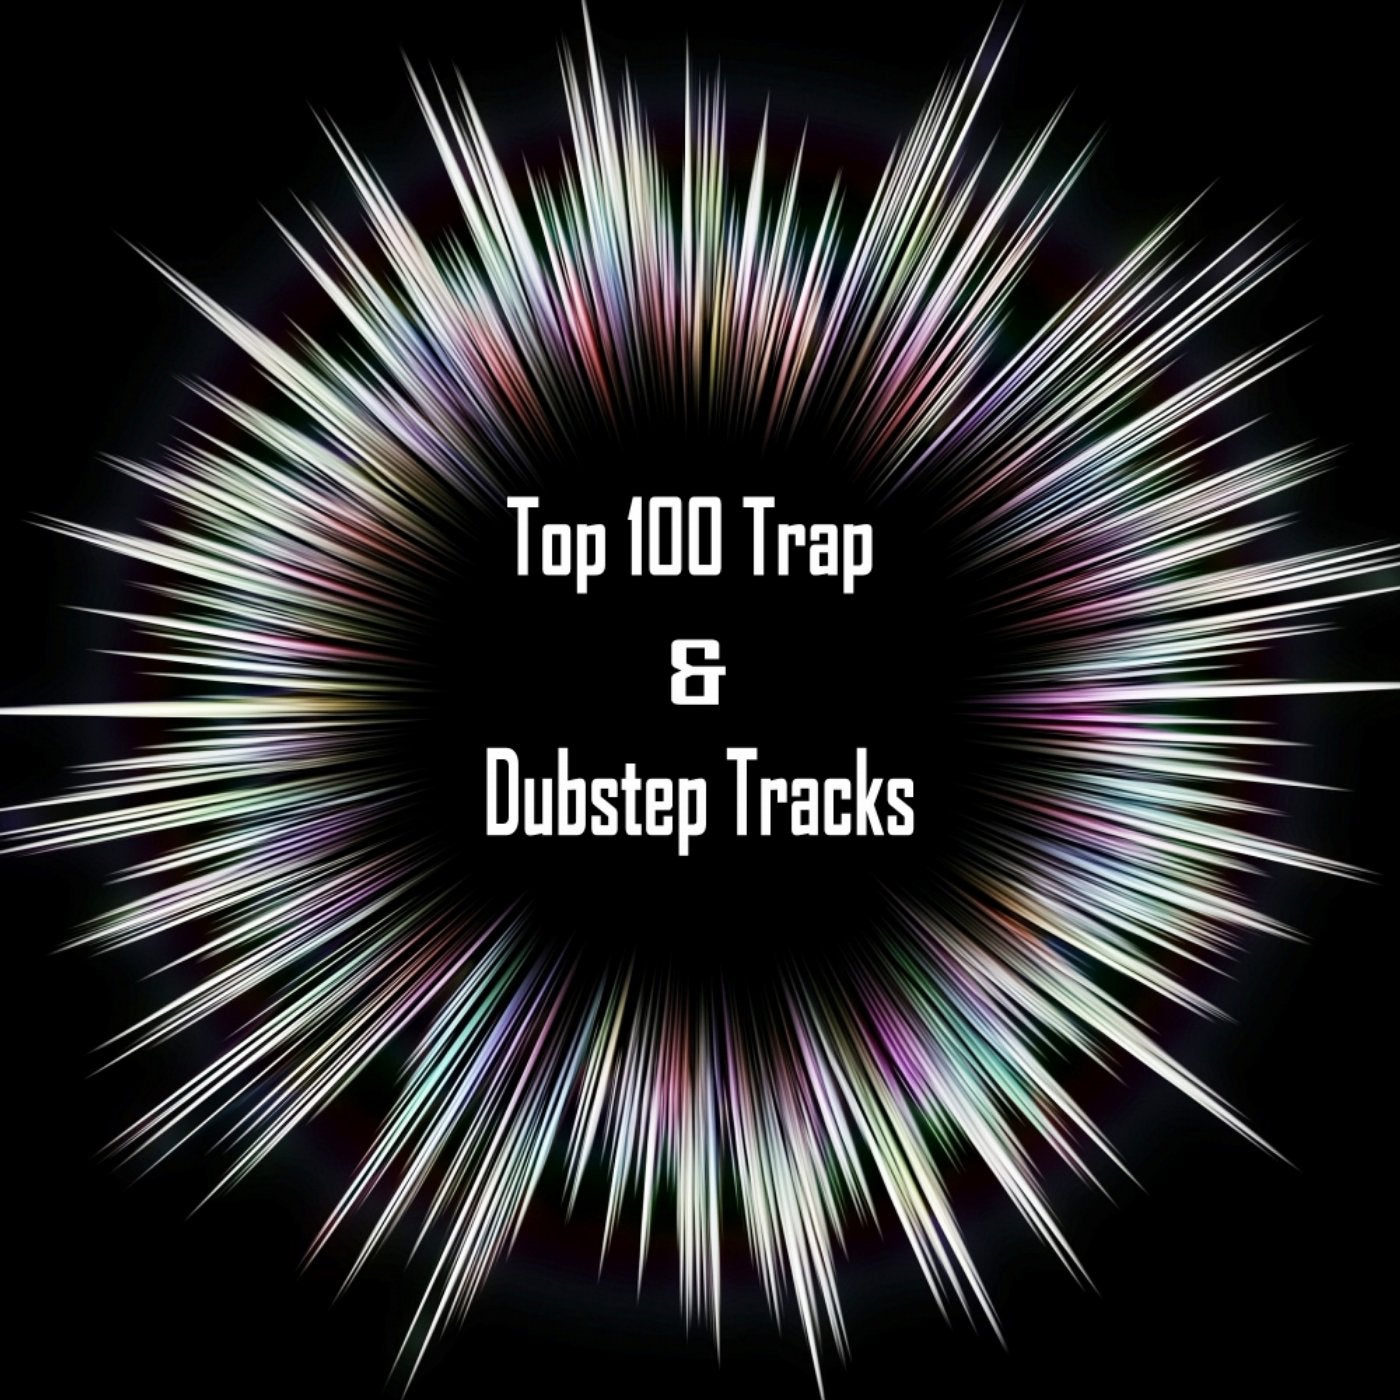 Top 100 Trap & Dubstep Tracks